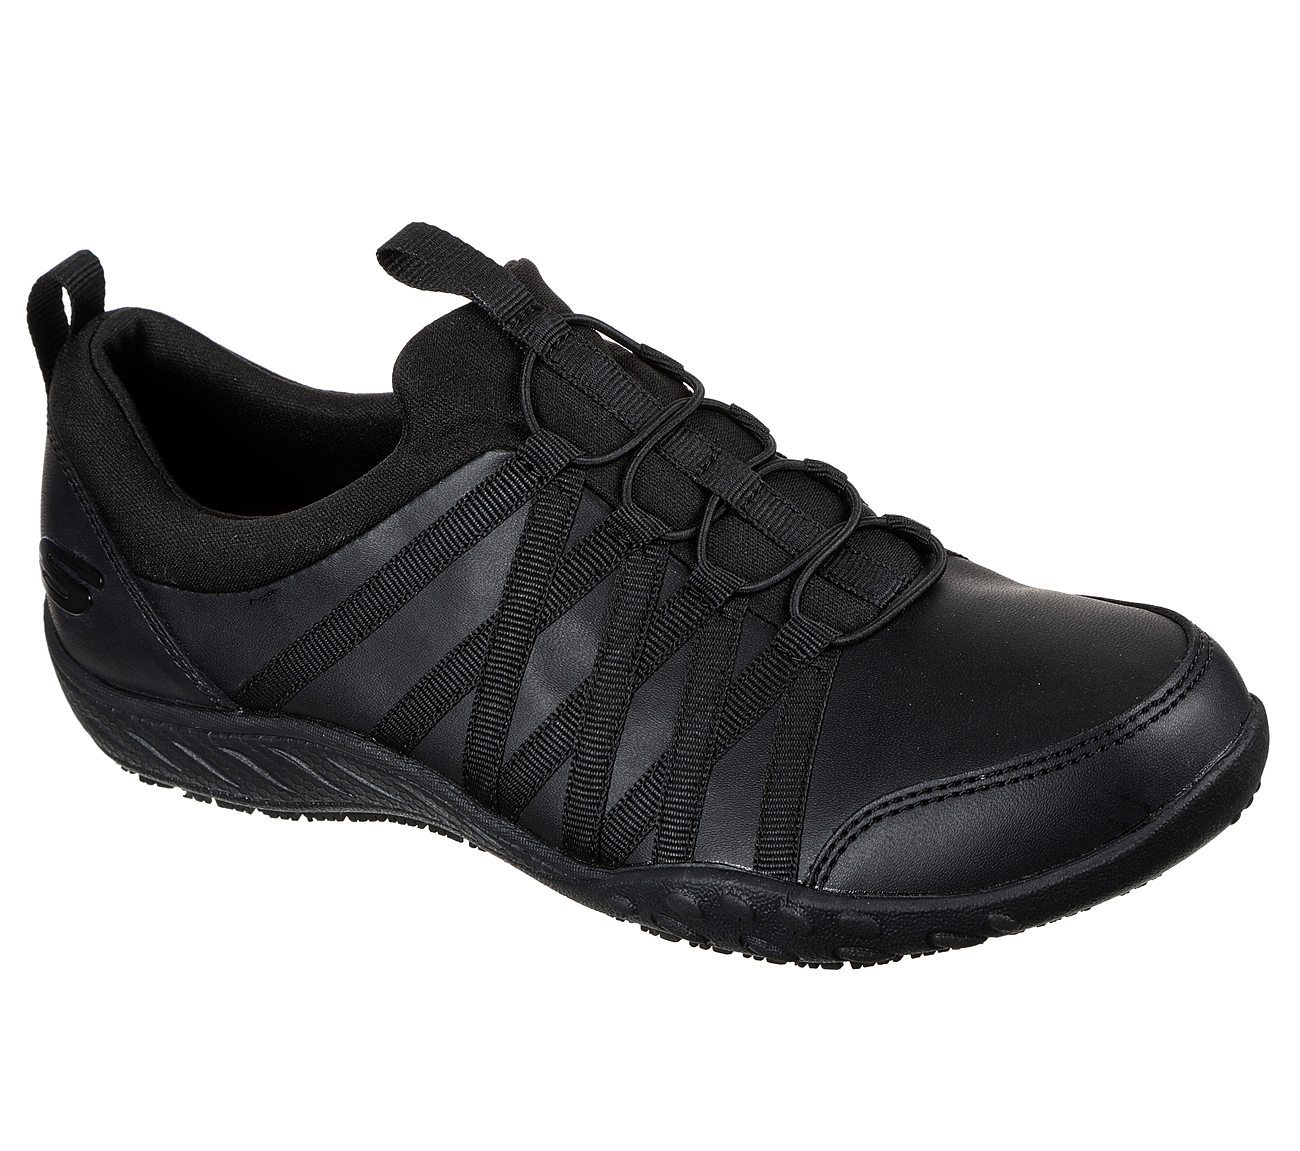 Buy SKECHERS Work: Rodessa - Dowding SR Work Shoes